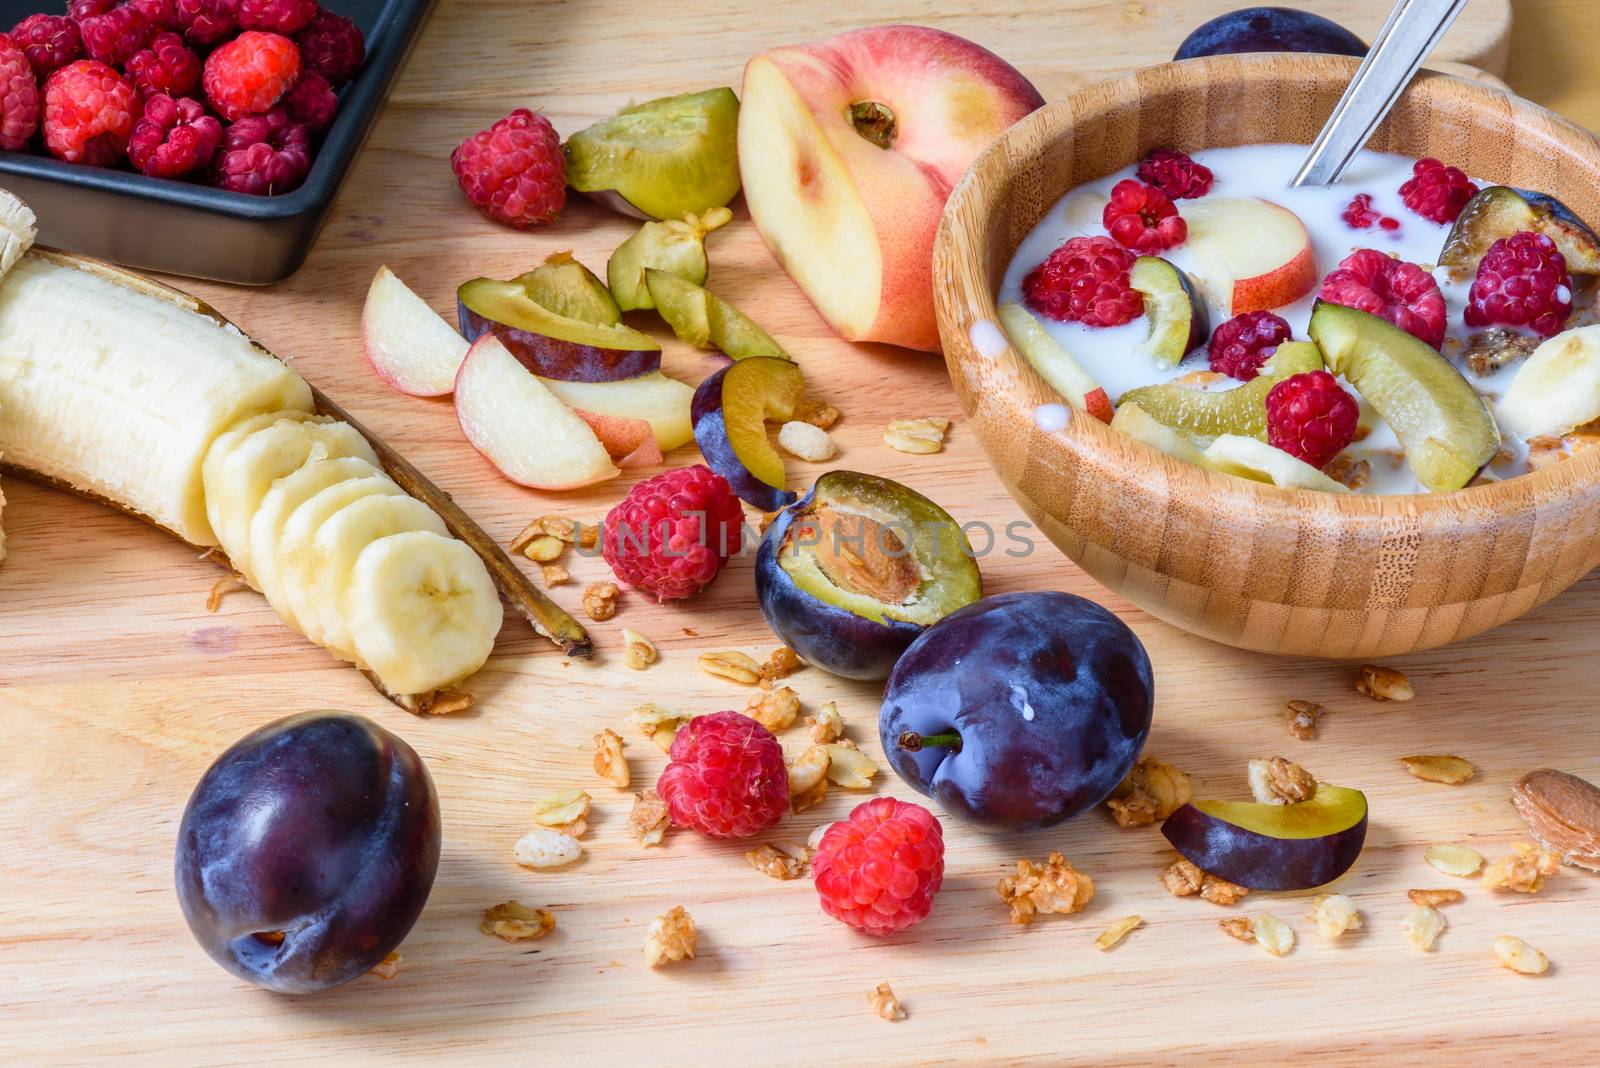 Muesli with sweet berries, fruits and milk by Seva_blsv